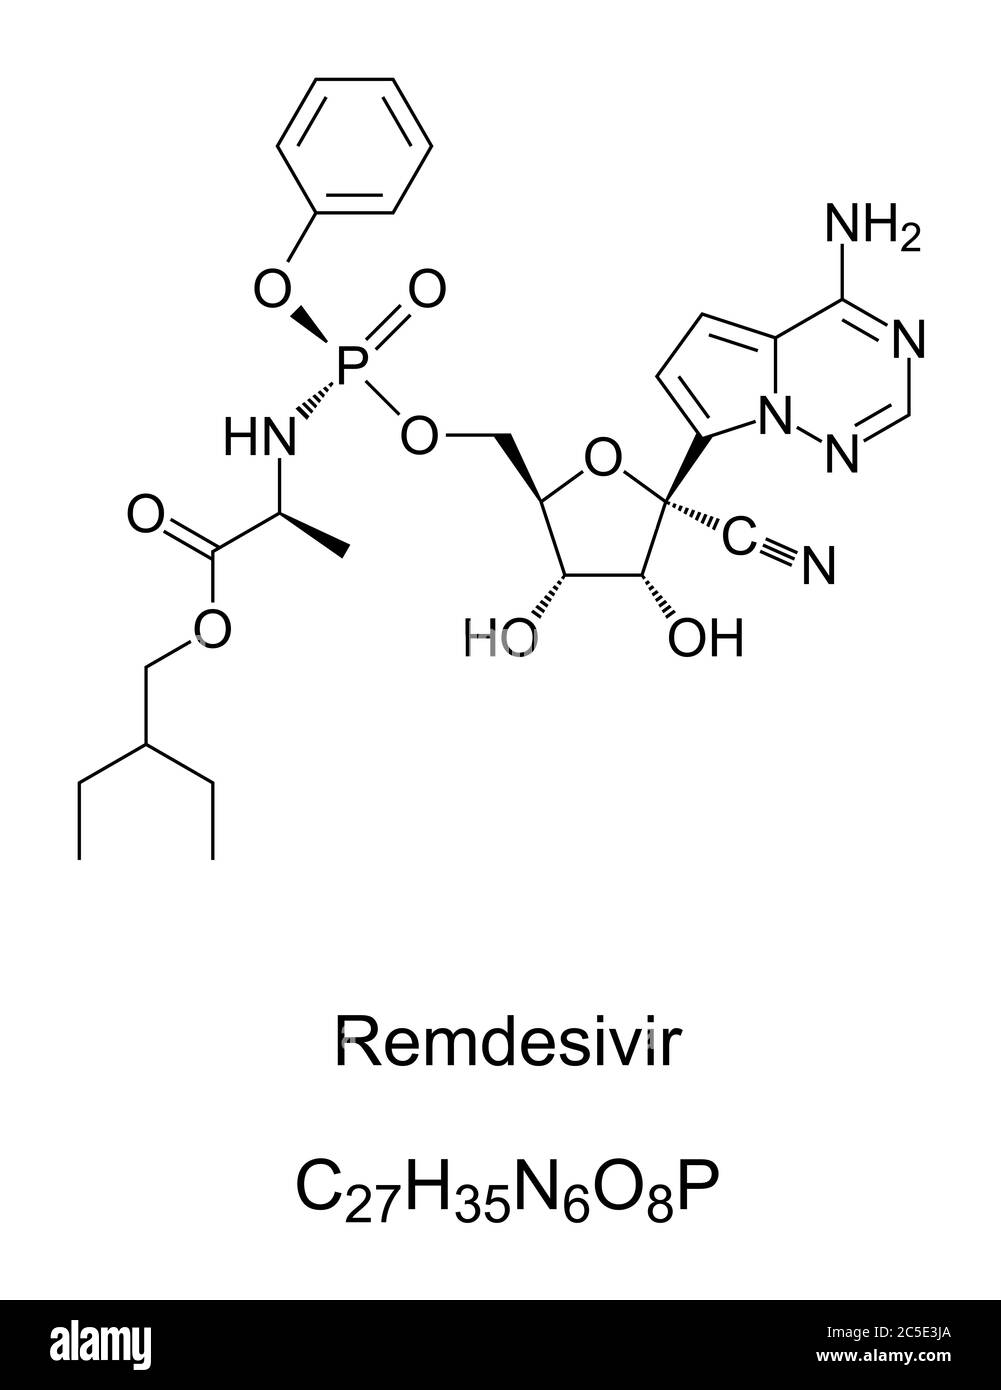 Remdesivir. Chemical structure. A broad-spectrum antiviral medication. Remdesivir is the international nonproprietary name, development code GS-5734. Stock Photo